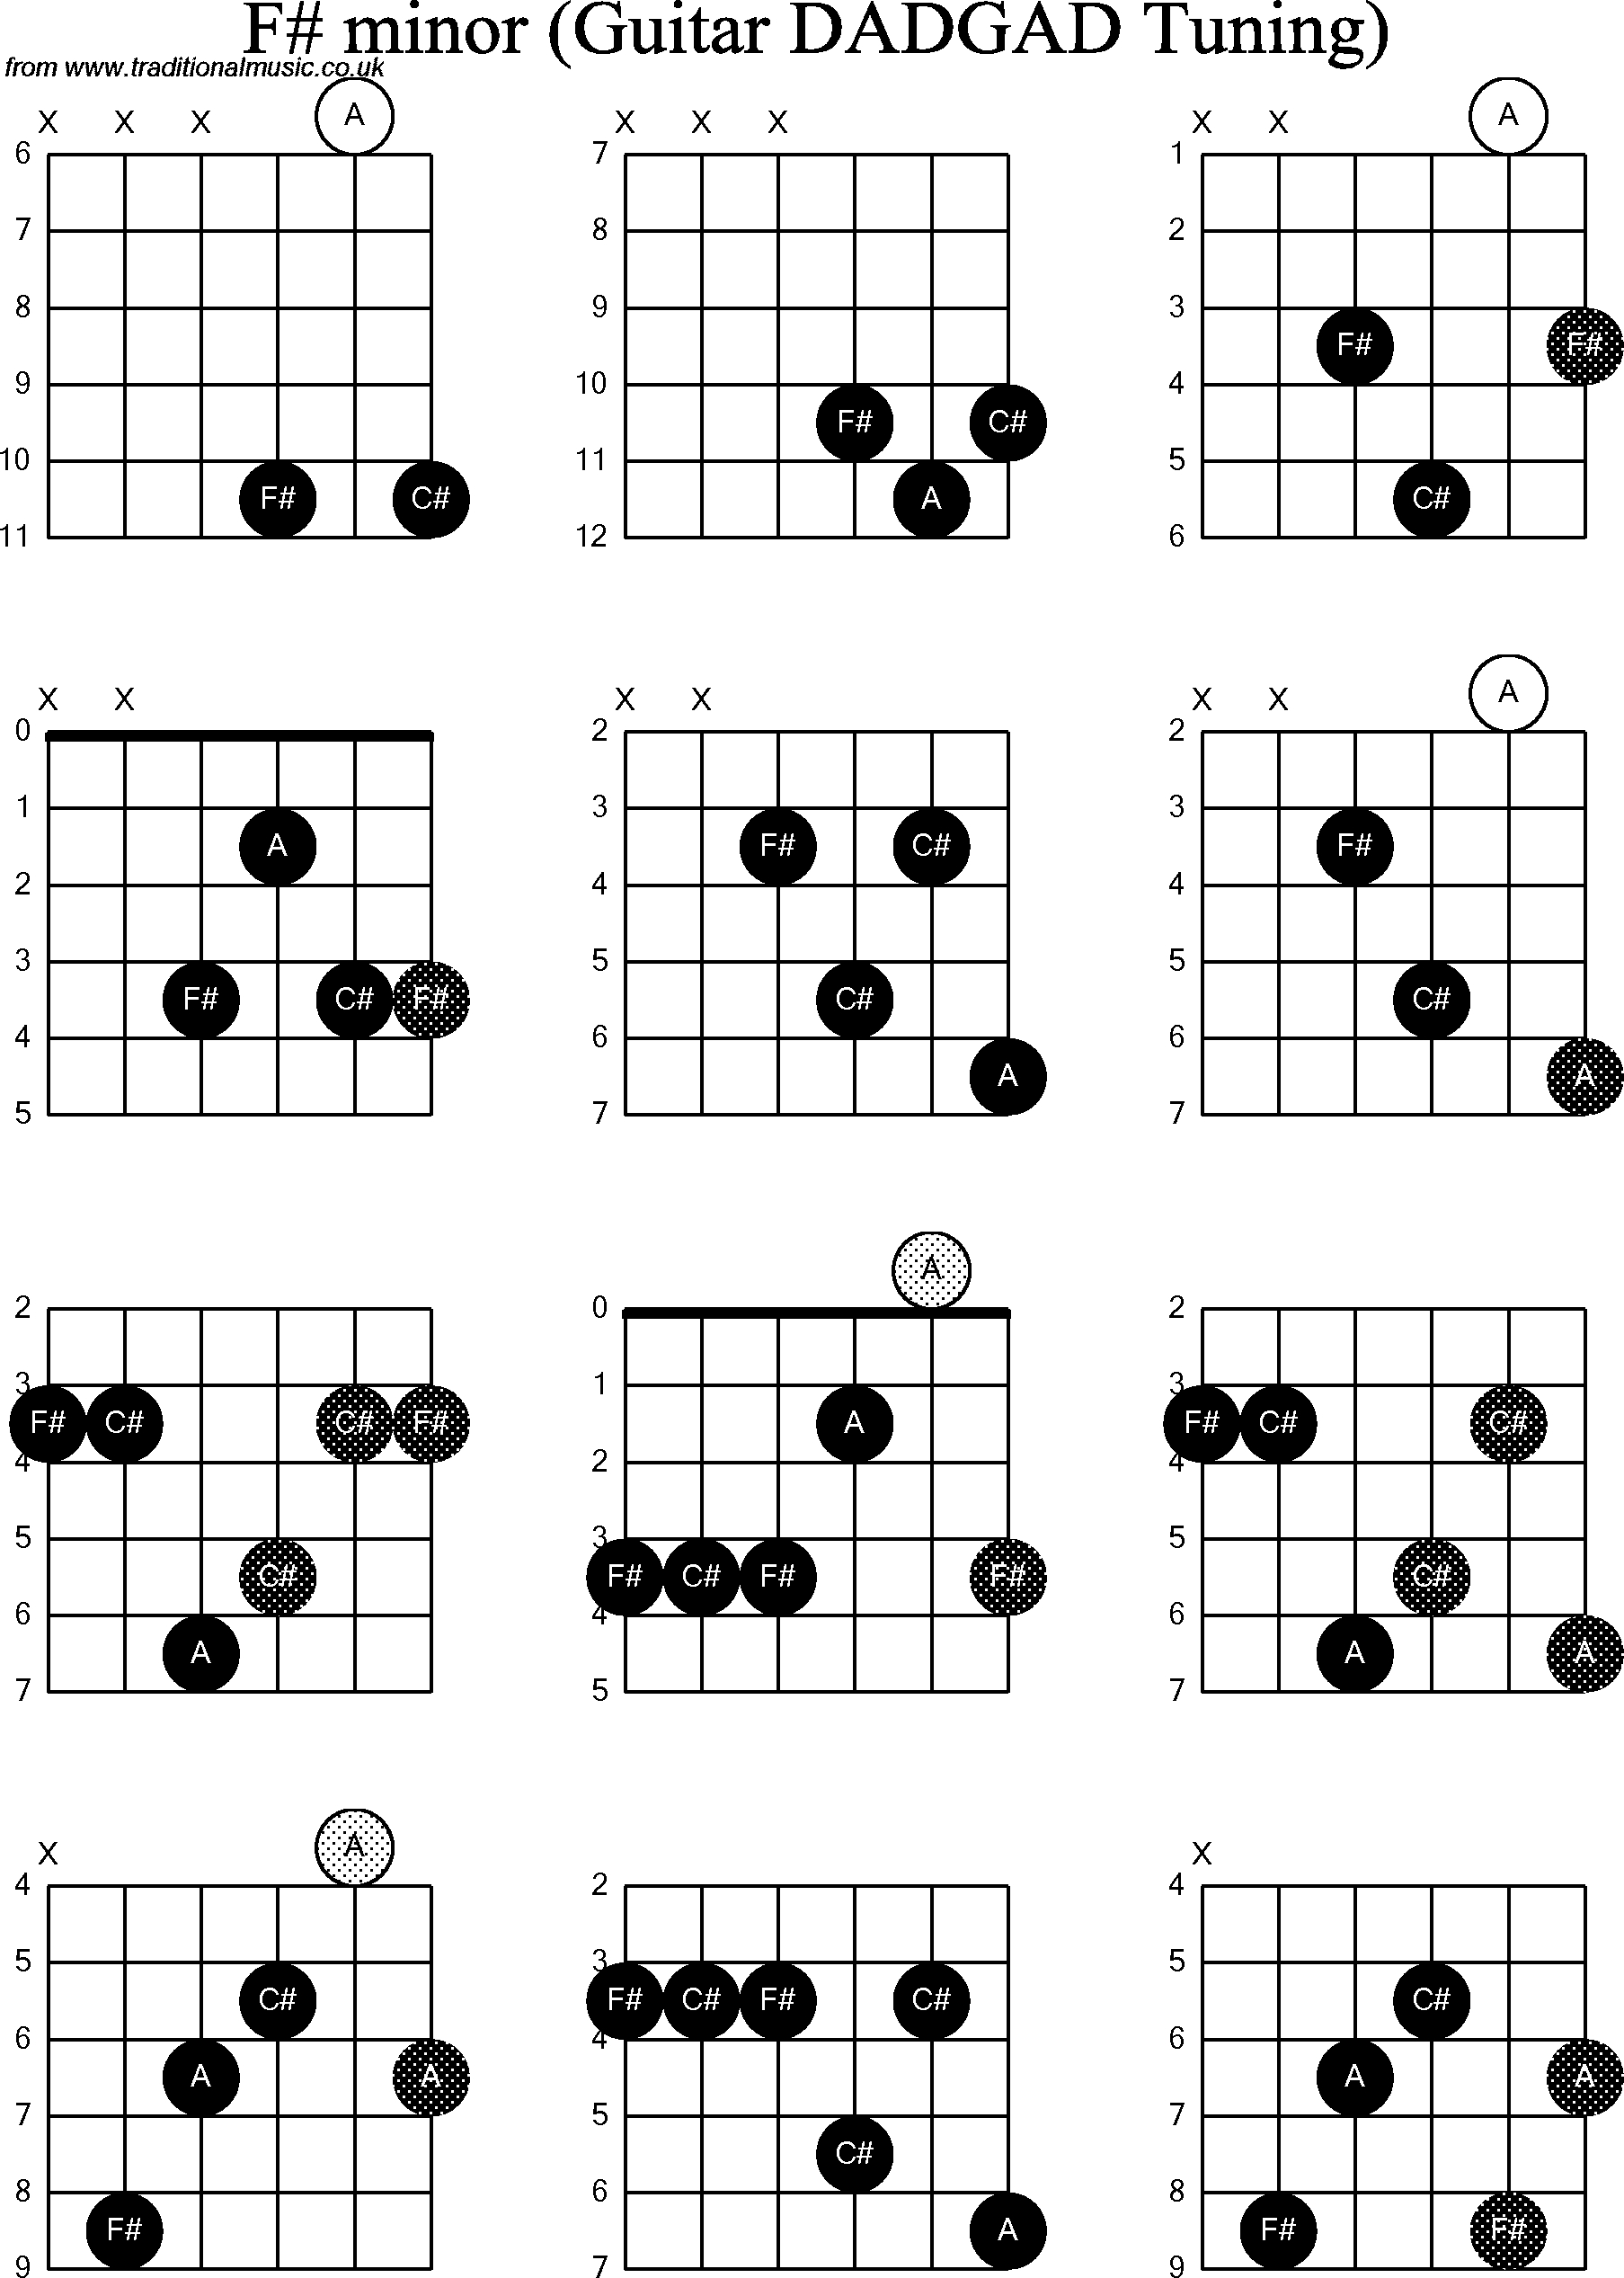 F# Guitar Chord Chord Diagrams D Modal Guitar Dadgad F Sharp Minor